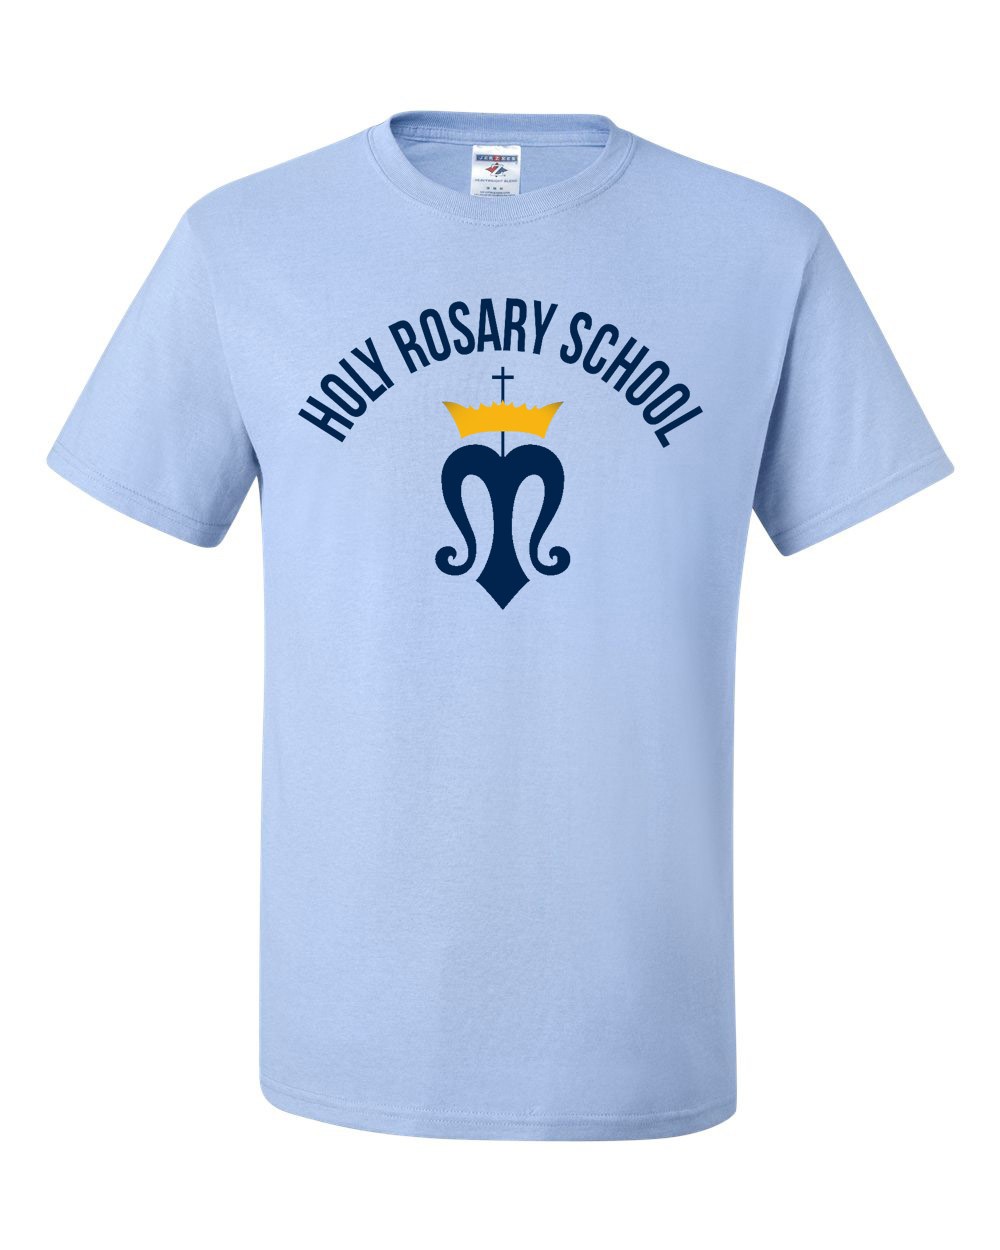 HRS Staff S/S Gym T-Shirt w/ School Logo